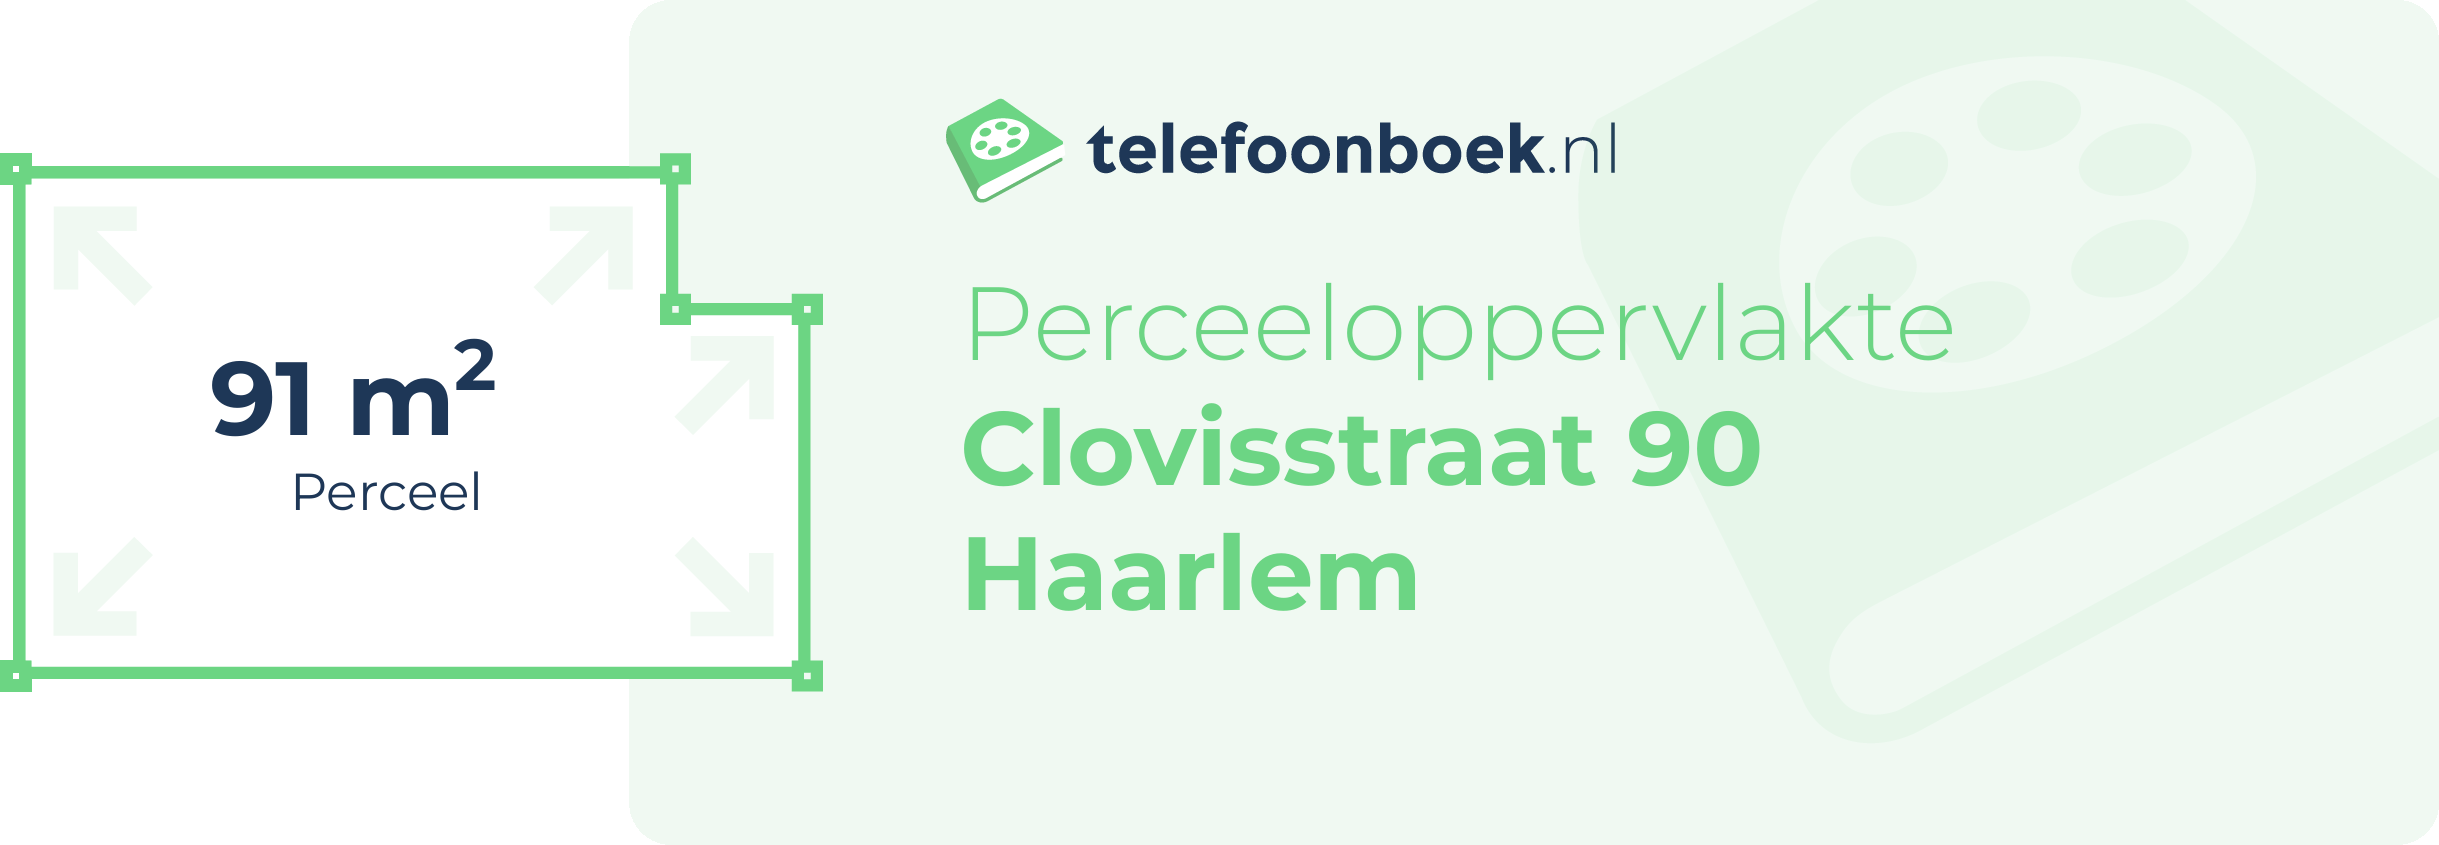 Perceeloppervlakte Clovisstraat 90 Haarlem